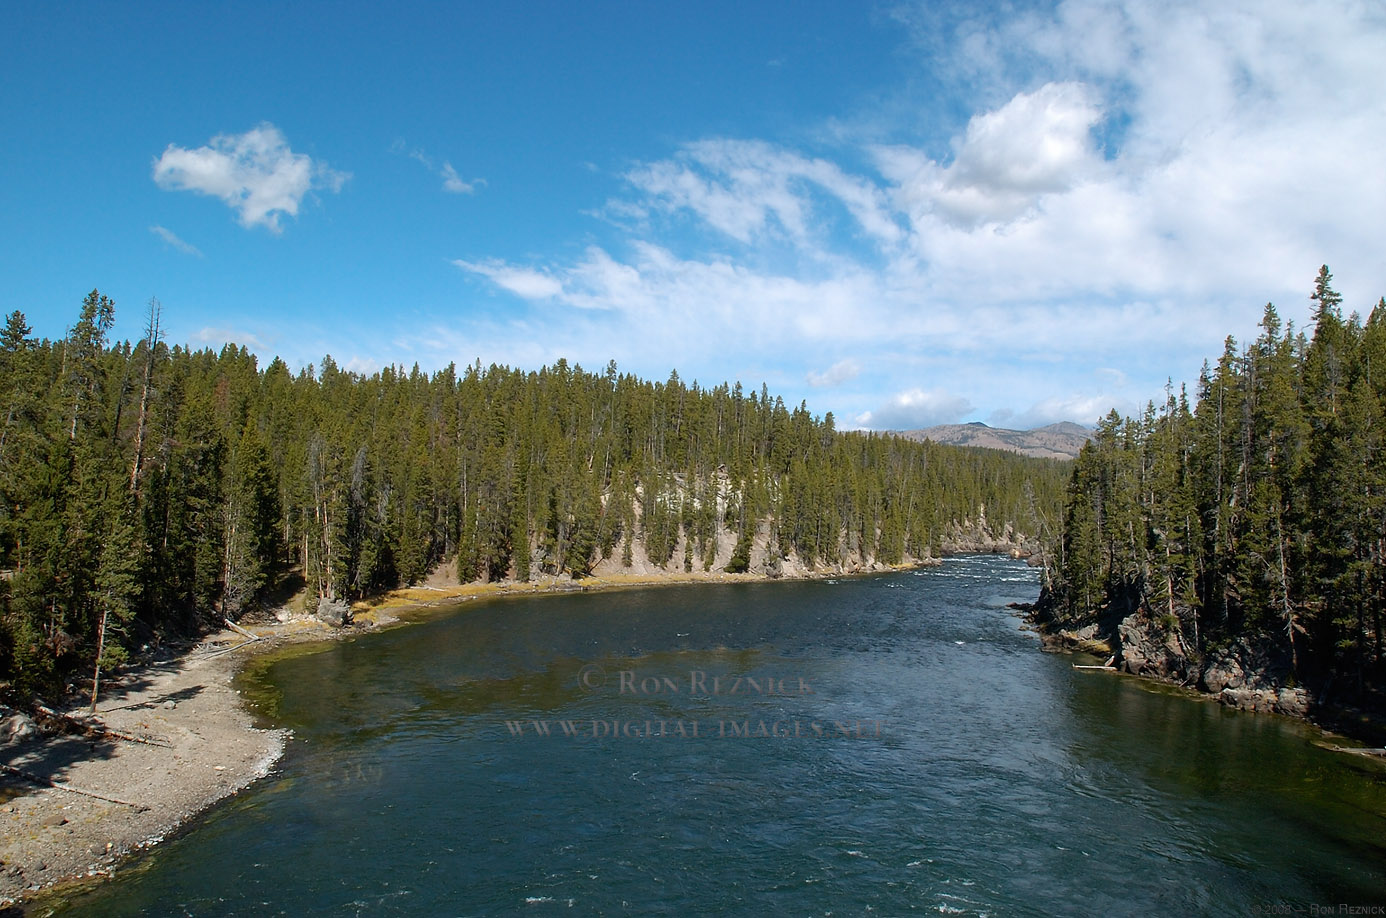 http://www.digital-images.net/Images/Yellowstone/YellowstoneRiver_0655.jpg